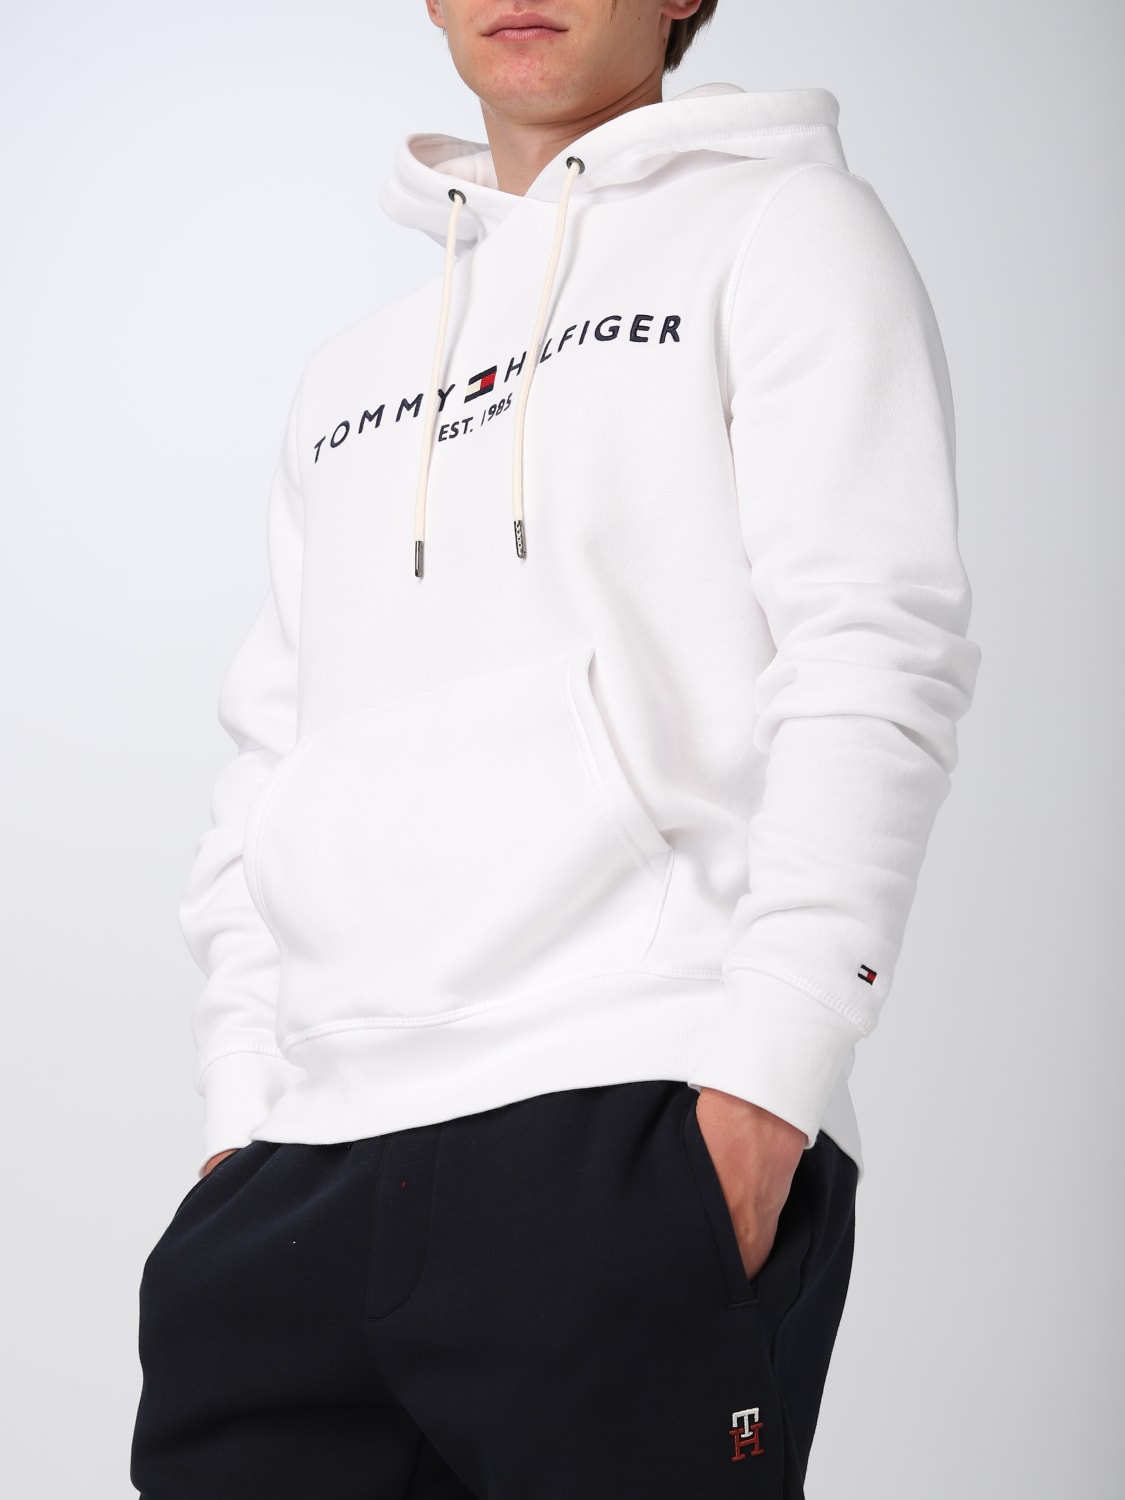 TOMMY HILFIGER: - sweatshirt | online blend MW0MW11599 Tommy cotton Hilfiger in sweatshirt at White